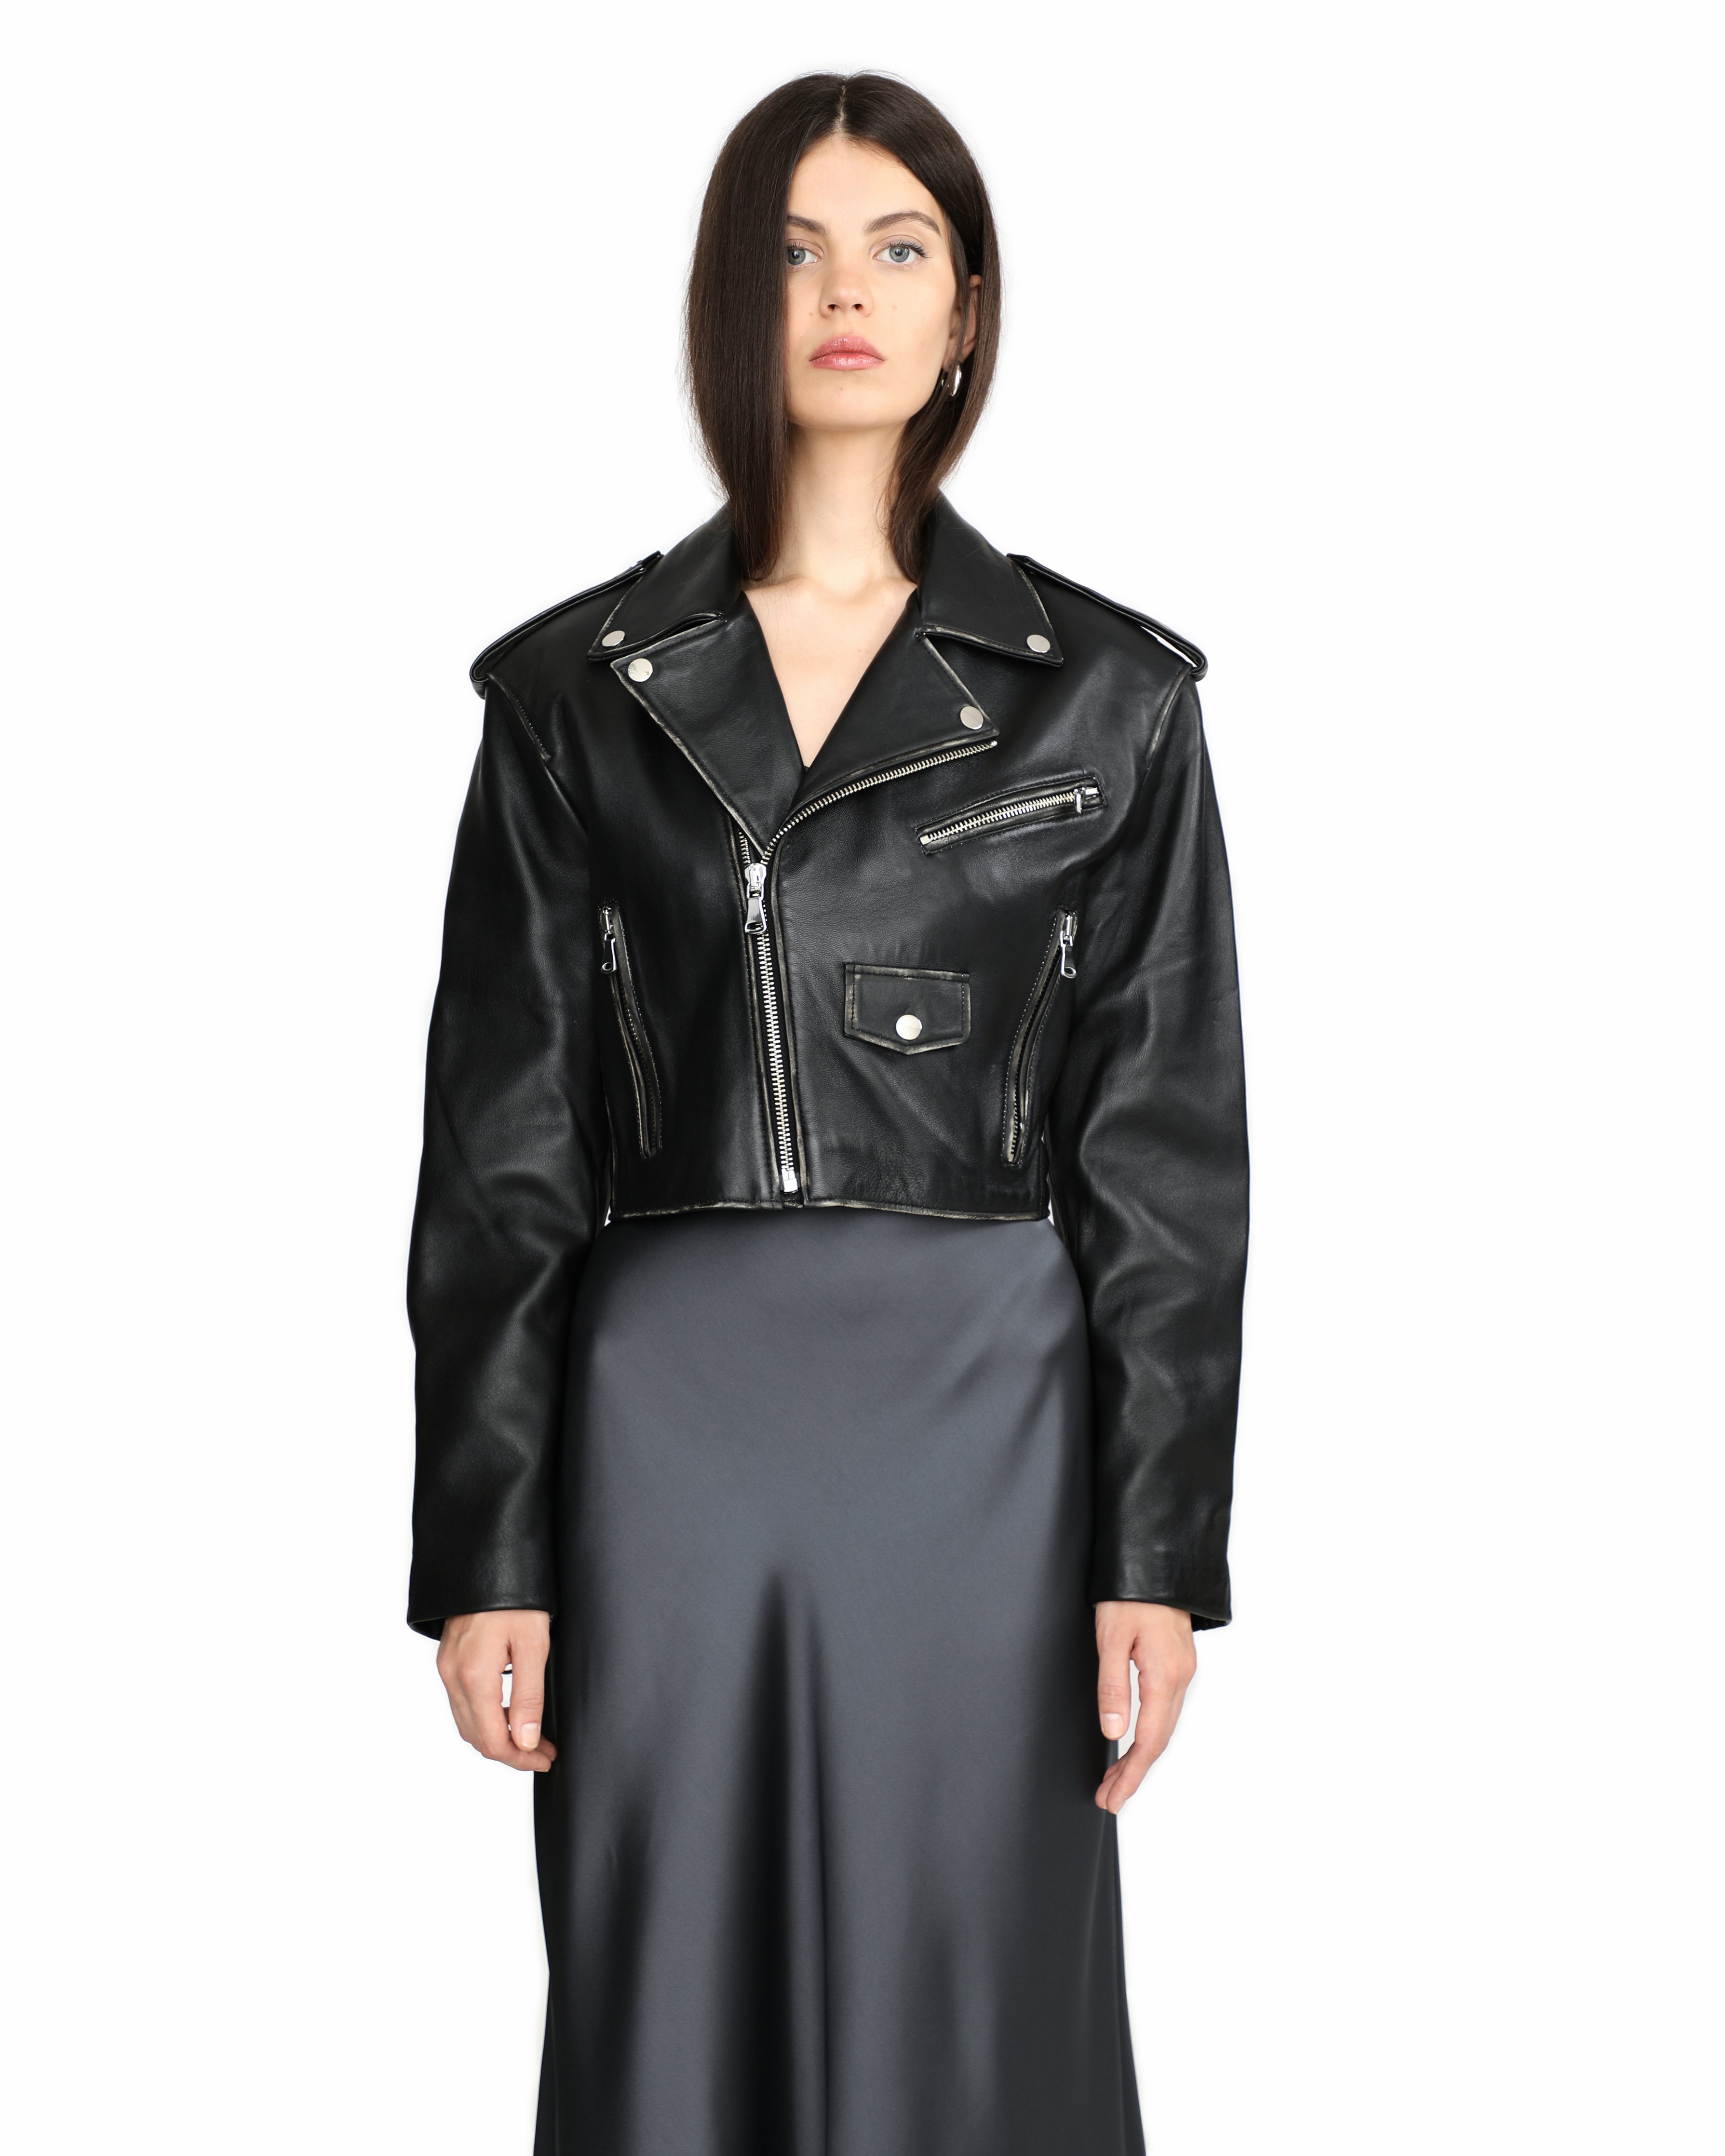 Amanda short black leather jacket with zipper and pockets front zoom photo